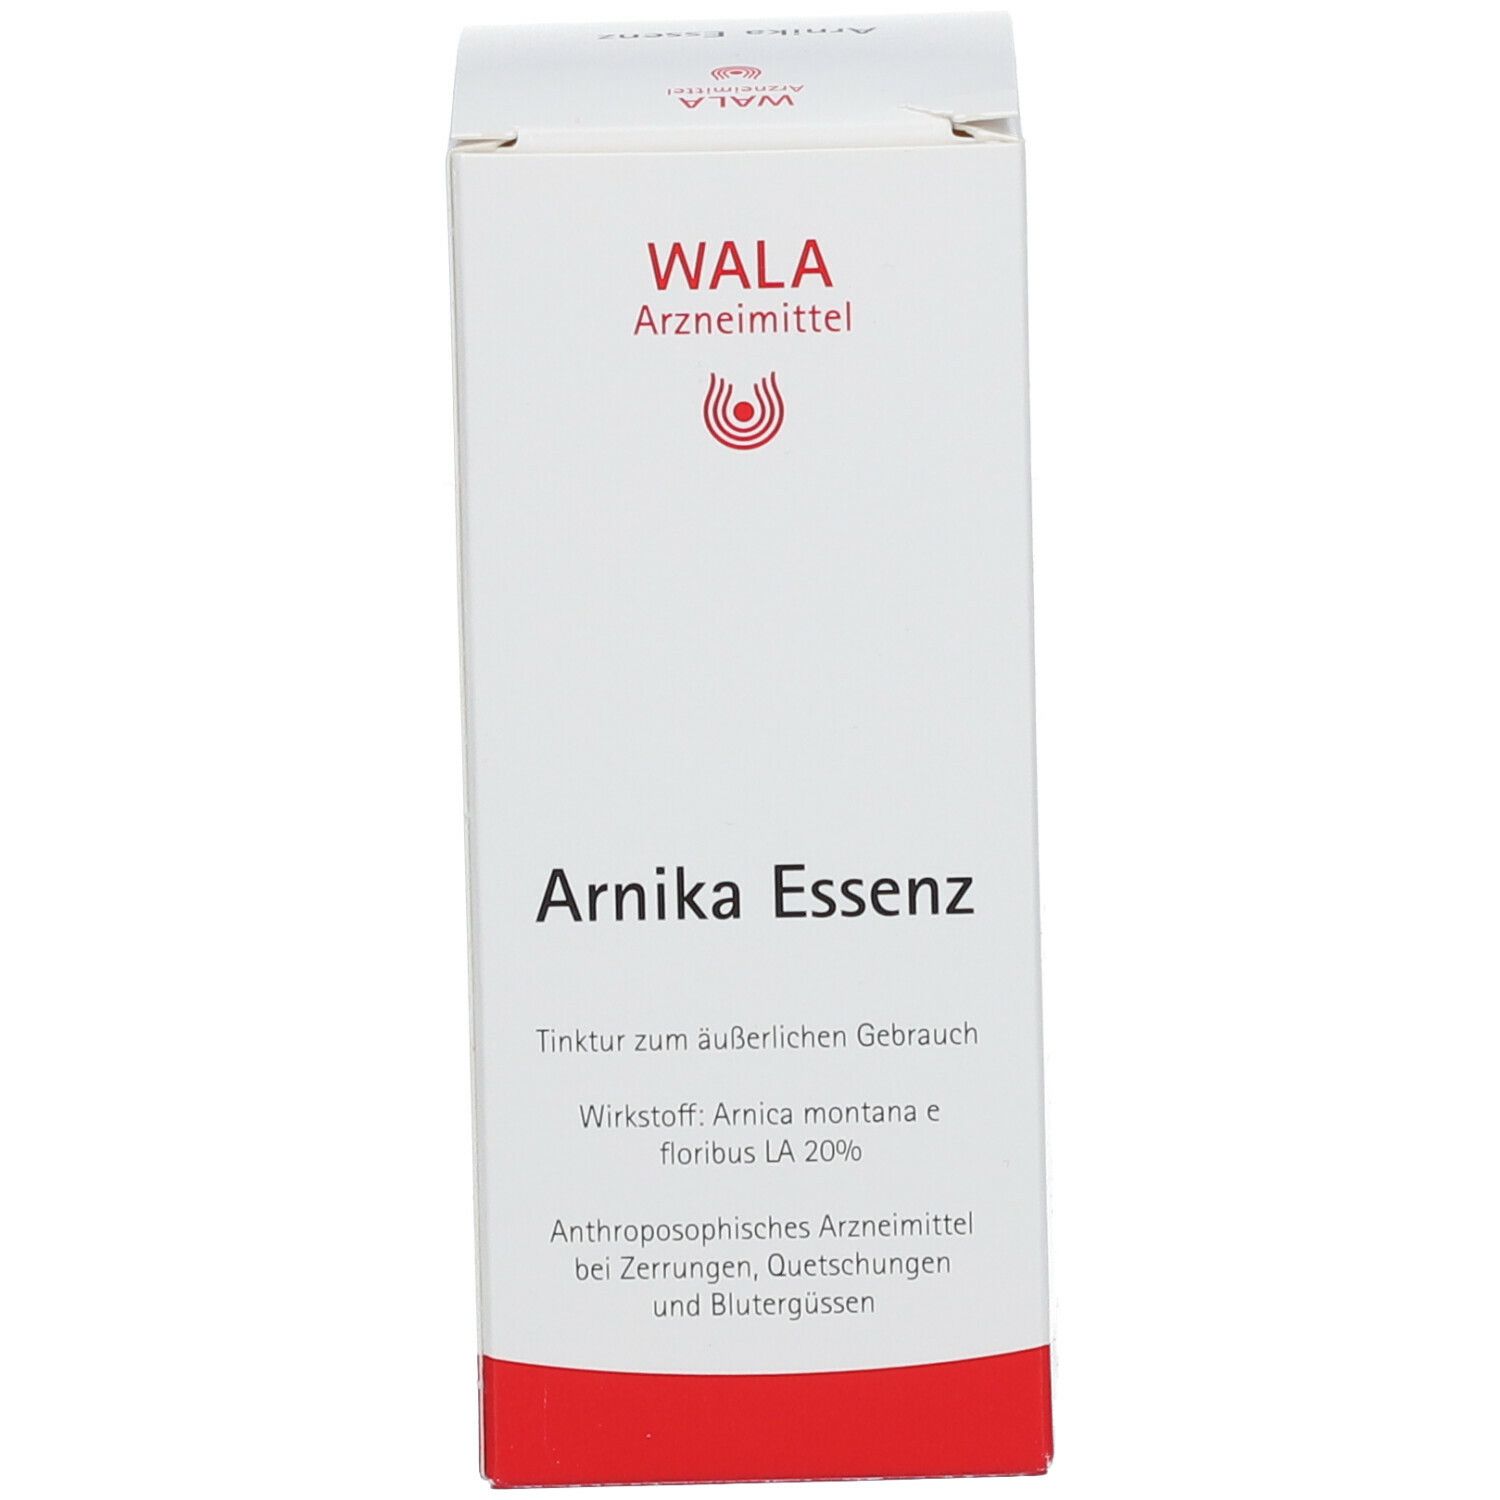 WALA® Arnika Essenz